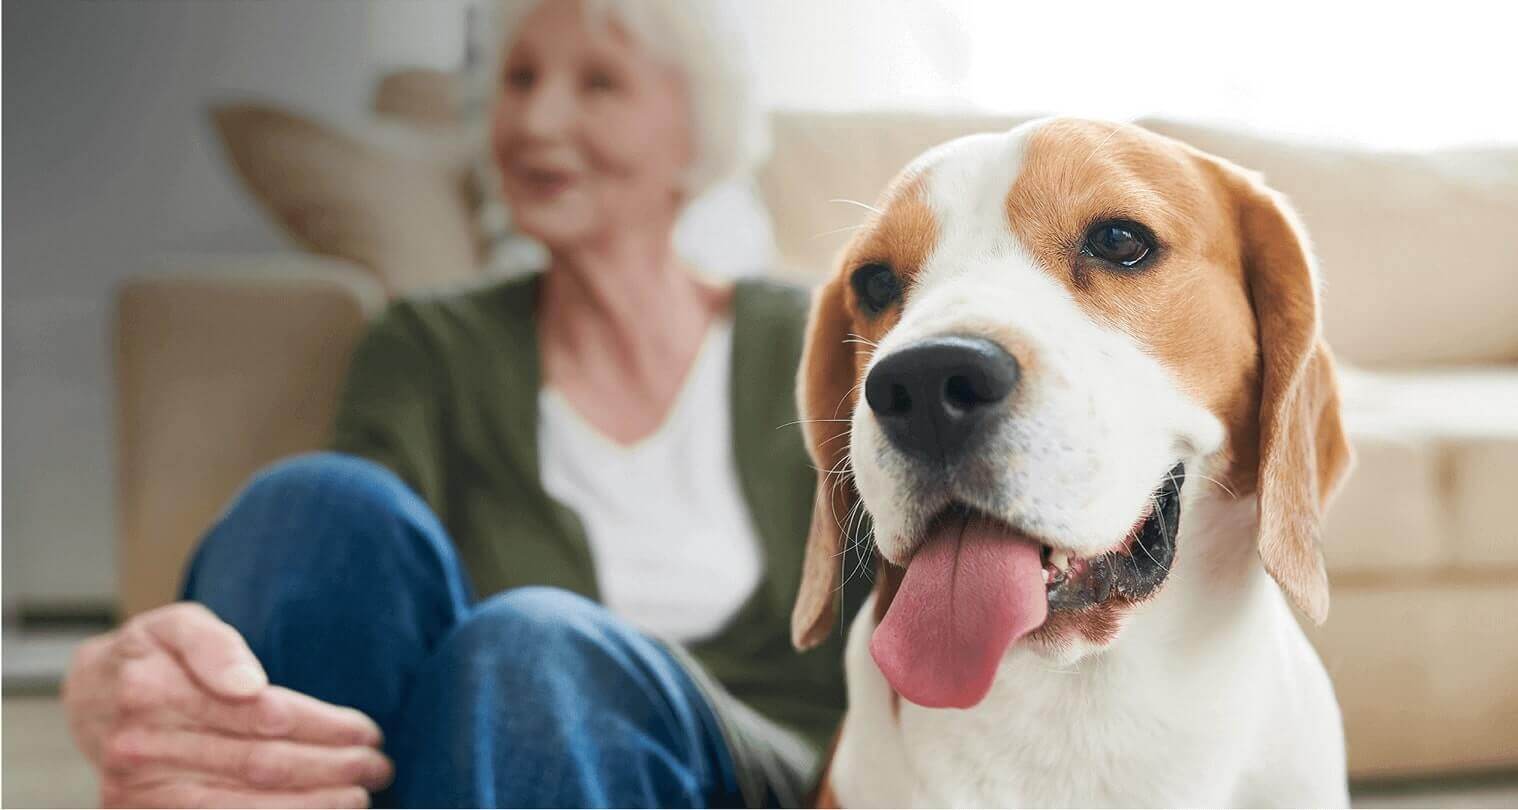 Service Dog Registration | Emotional Support Dog | Therapy Dog